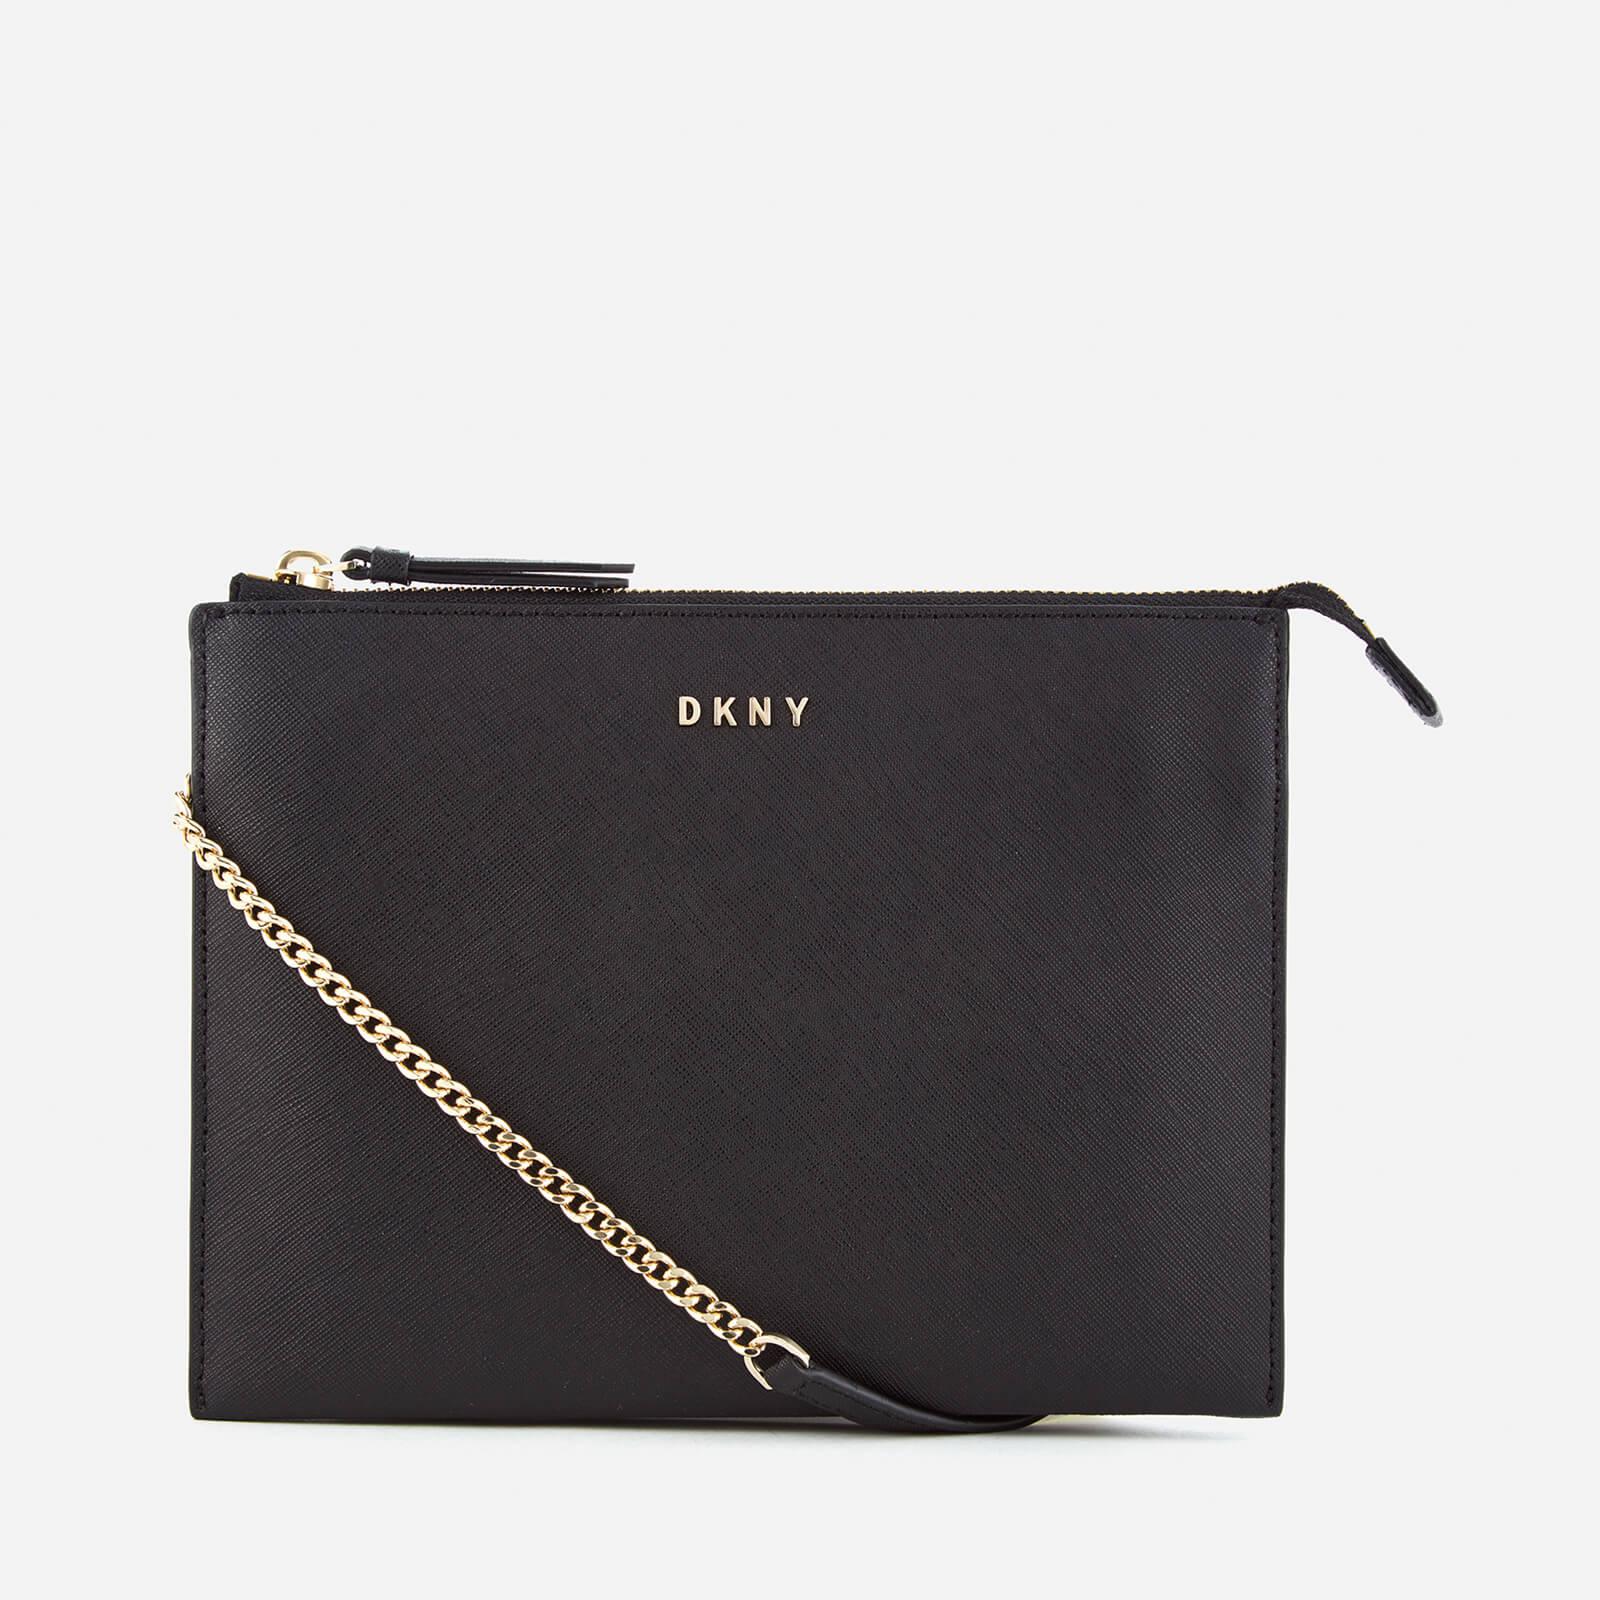 DKNY Bryant Park Top Zip Cross Body Chino/Caramel One Size: Handbags